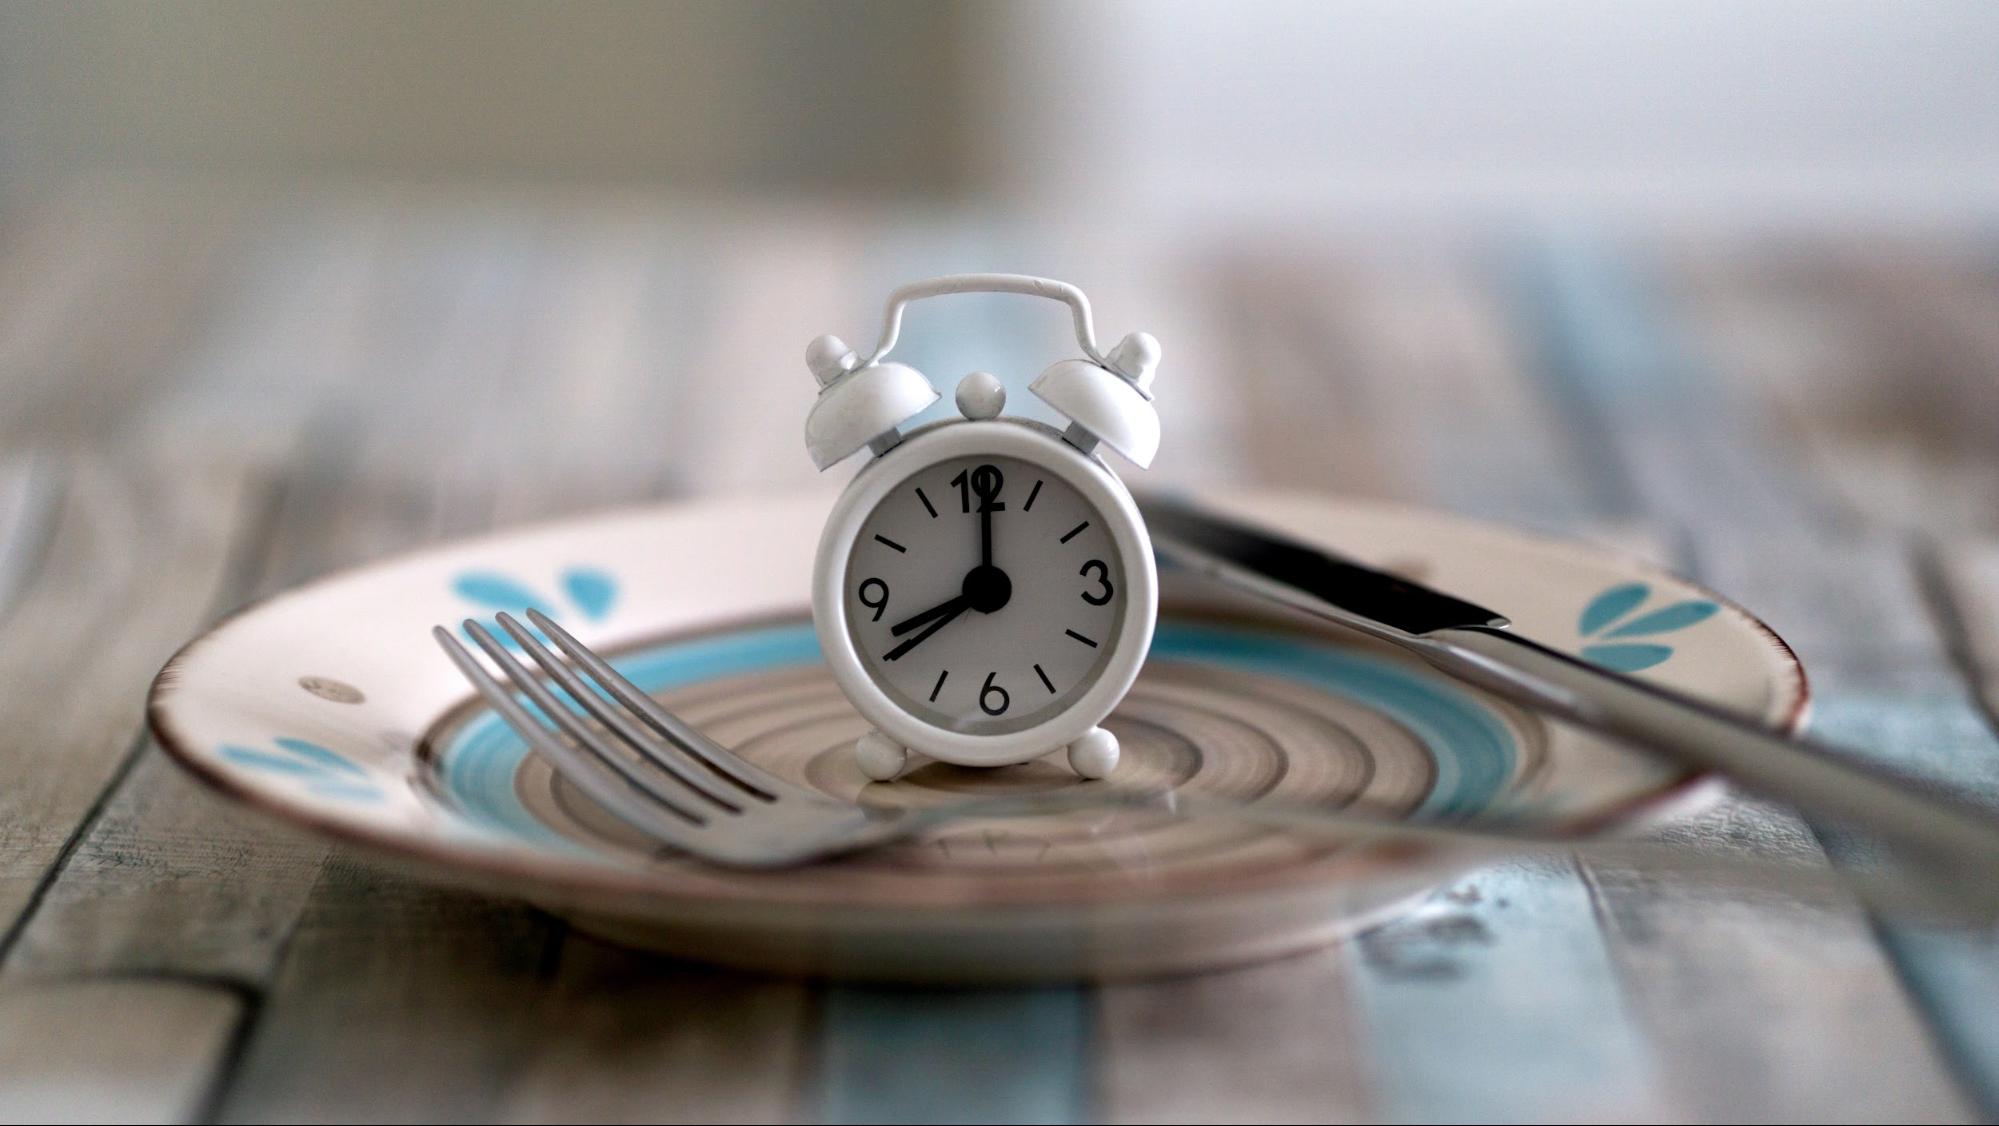 analog alarm clock on plate with silverware